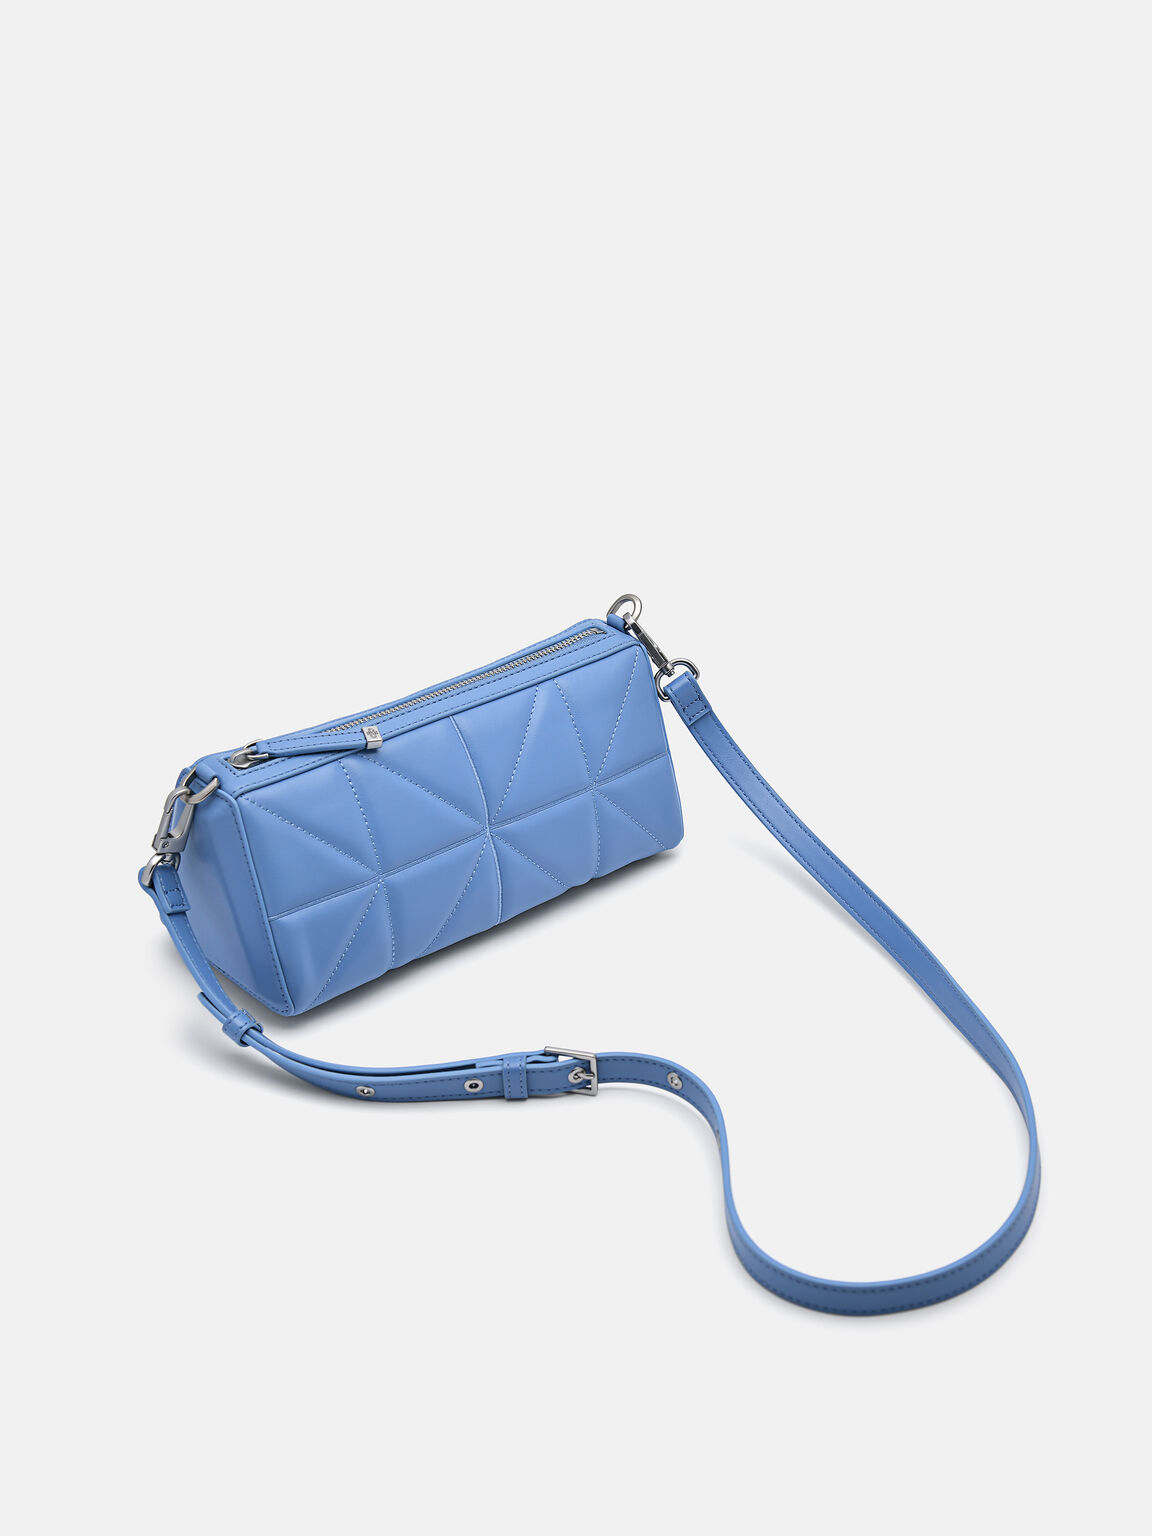 Helix Mini Bowling Bag in Pixel, Blue